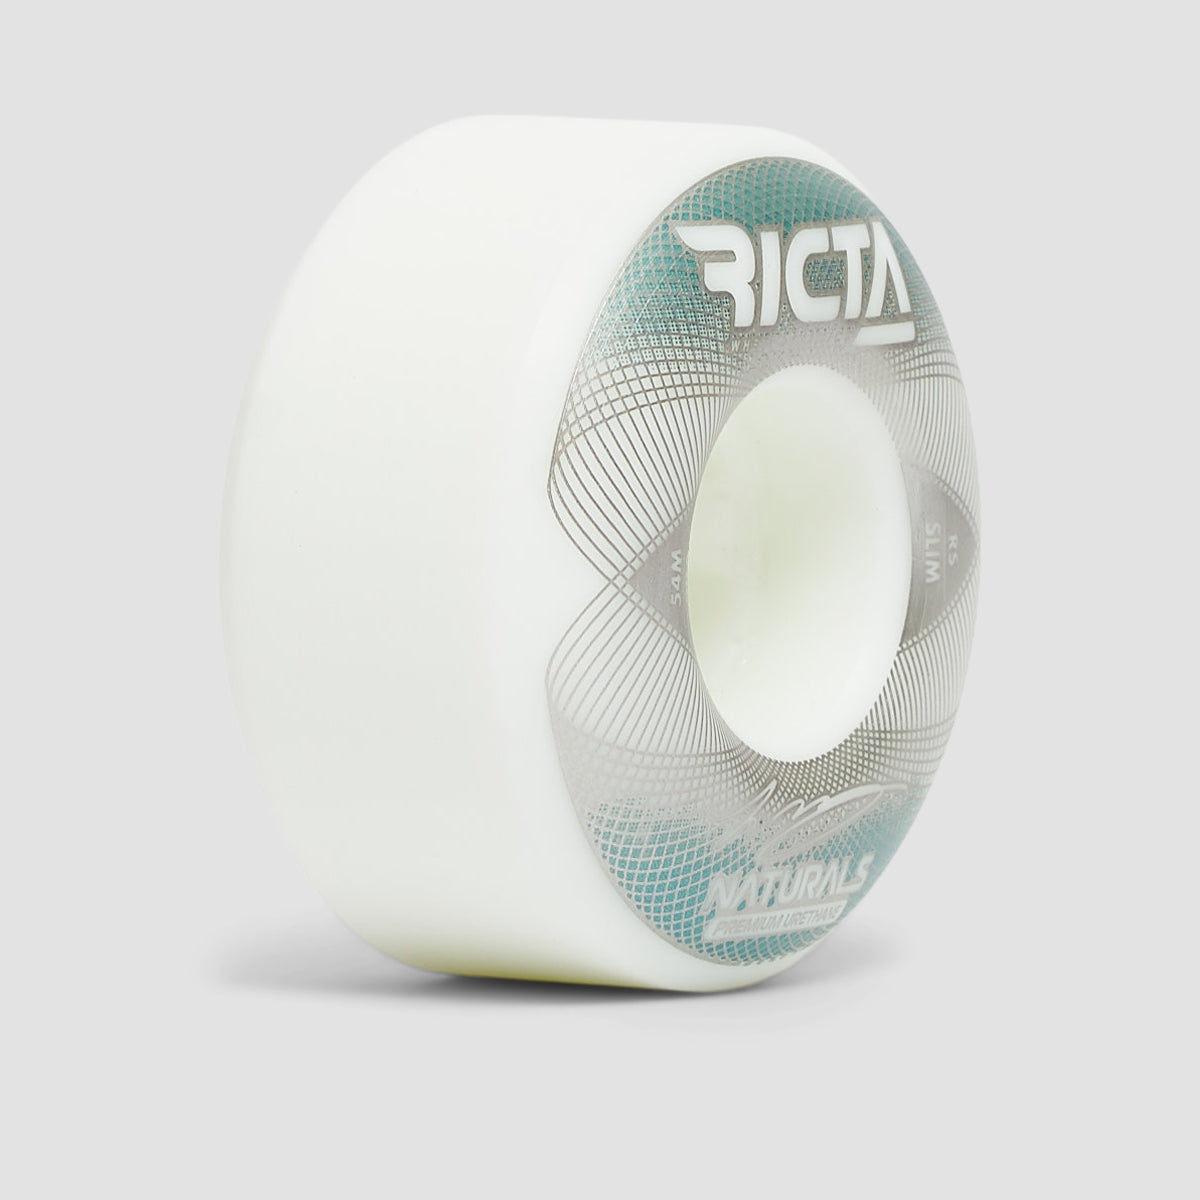 Ricta Geo Naturals McCoy Slim 99a Skateboard Wheels - 54mm